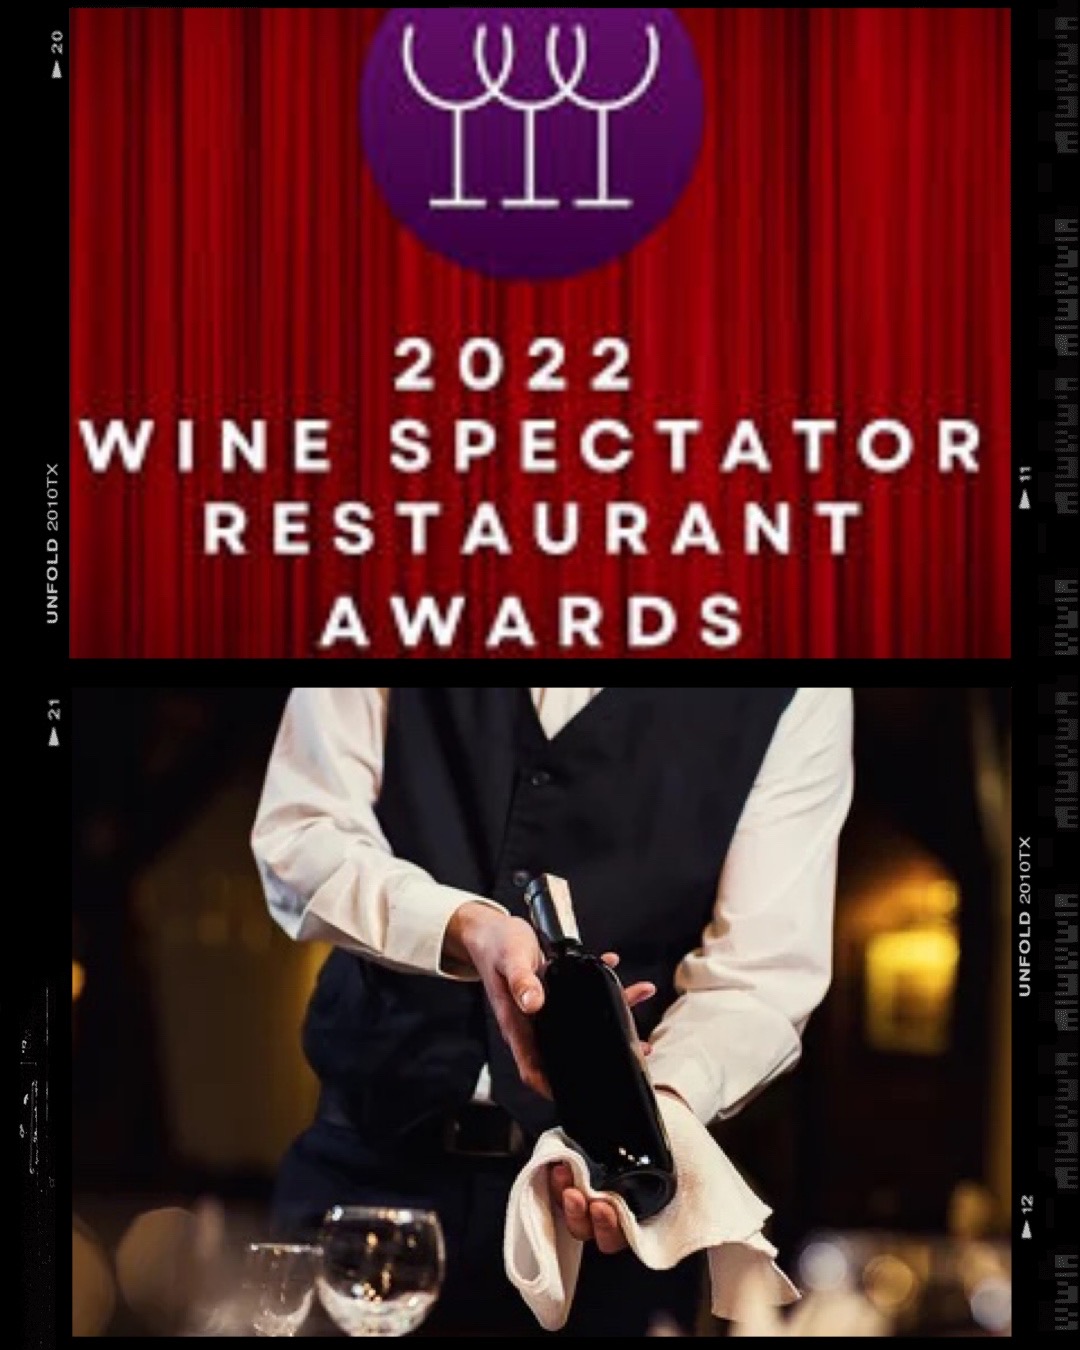 A Summary of Wine Spectator’s 2022 “Grand Award” Winners